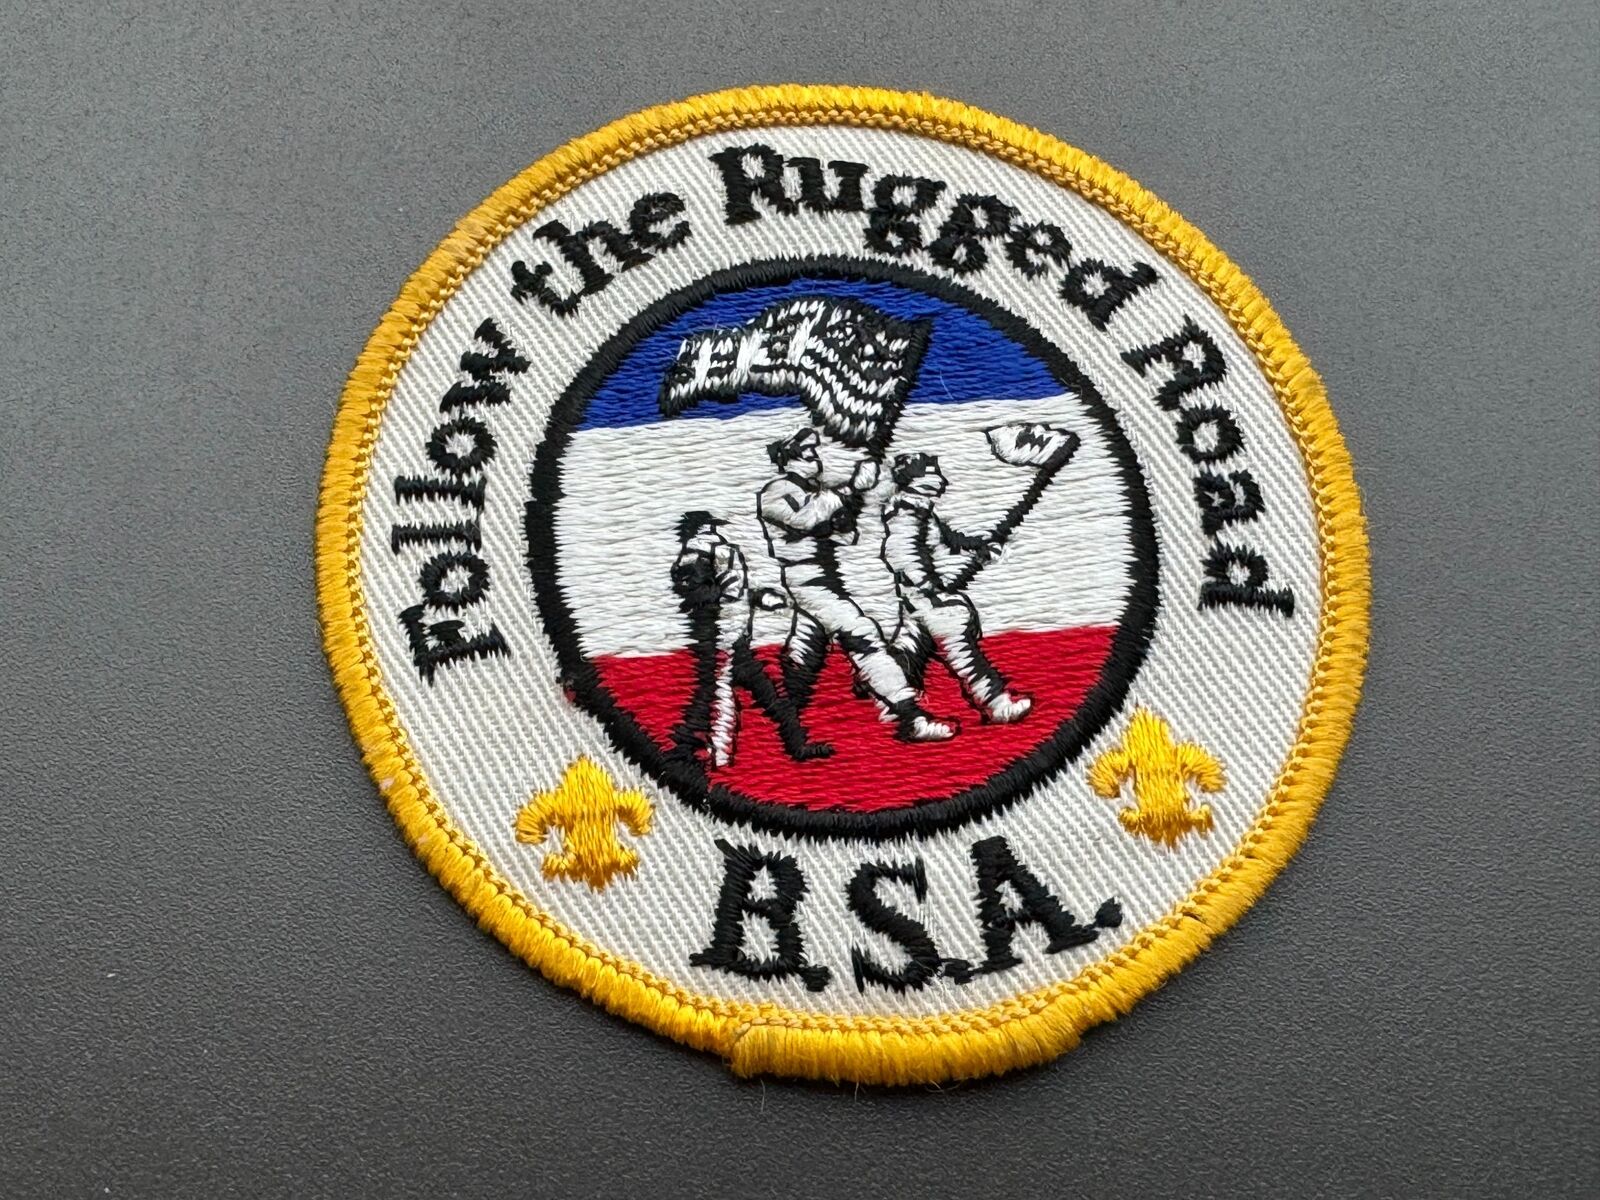 BSA, 1966 “Follow the Rugged Road” Program Theme Patch